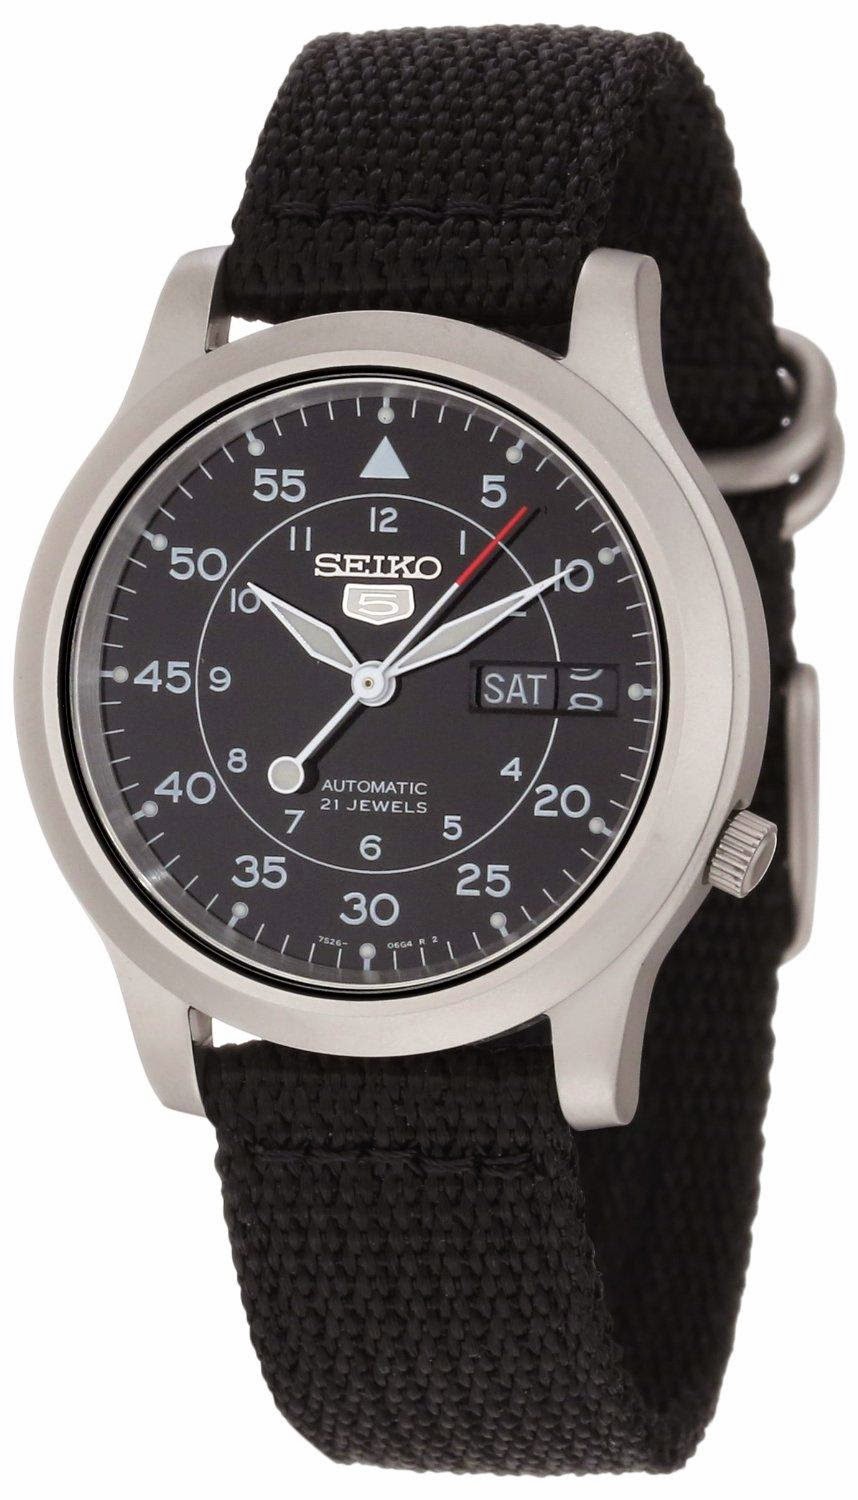 Seiko Men's SNK809 "Seiko 5" Automatic Watch with Black Canvas Strap